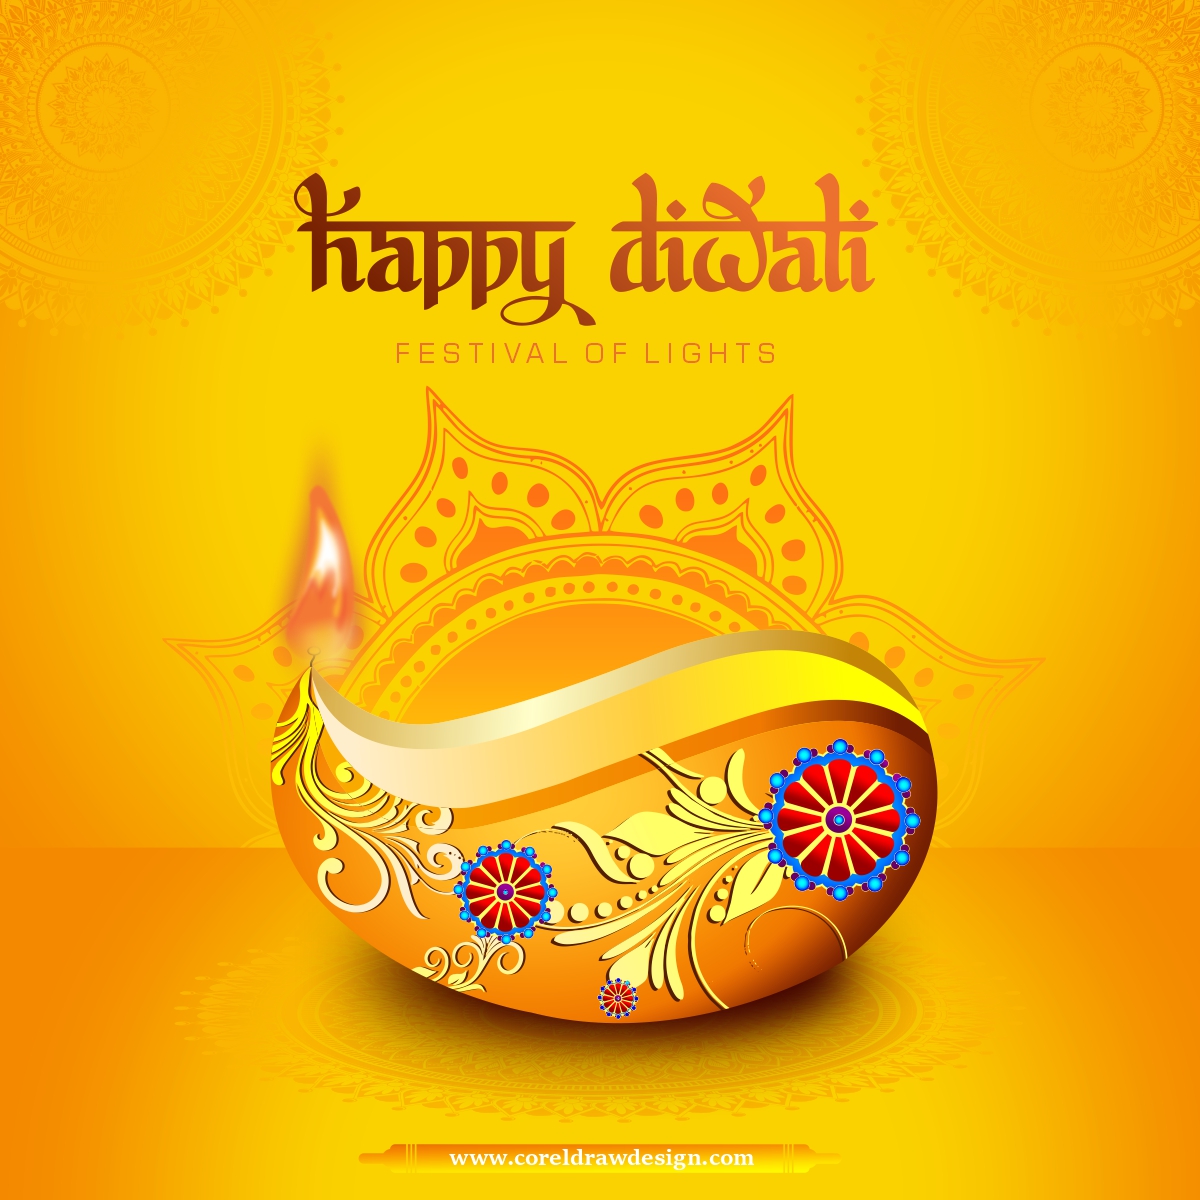 Happy Diwali Wishes Card With Designing Diya Design Free Vector